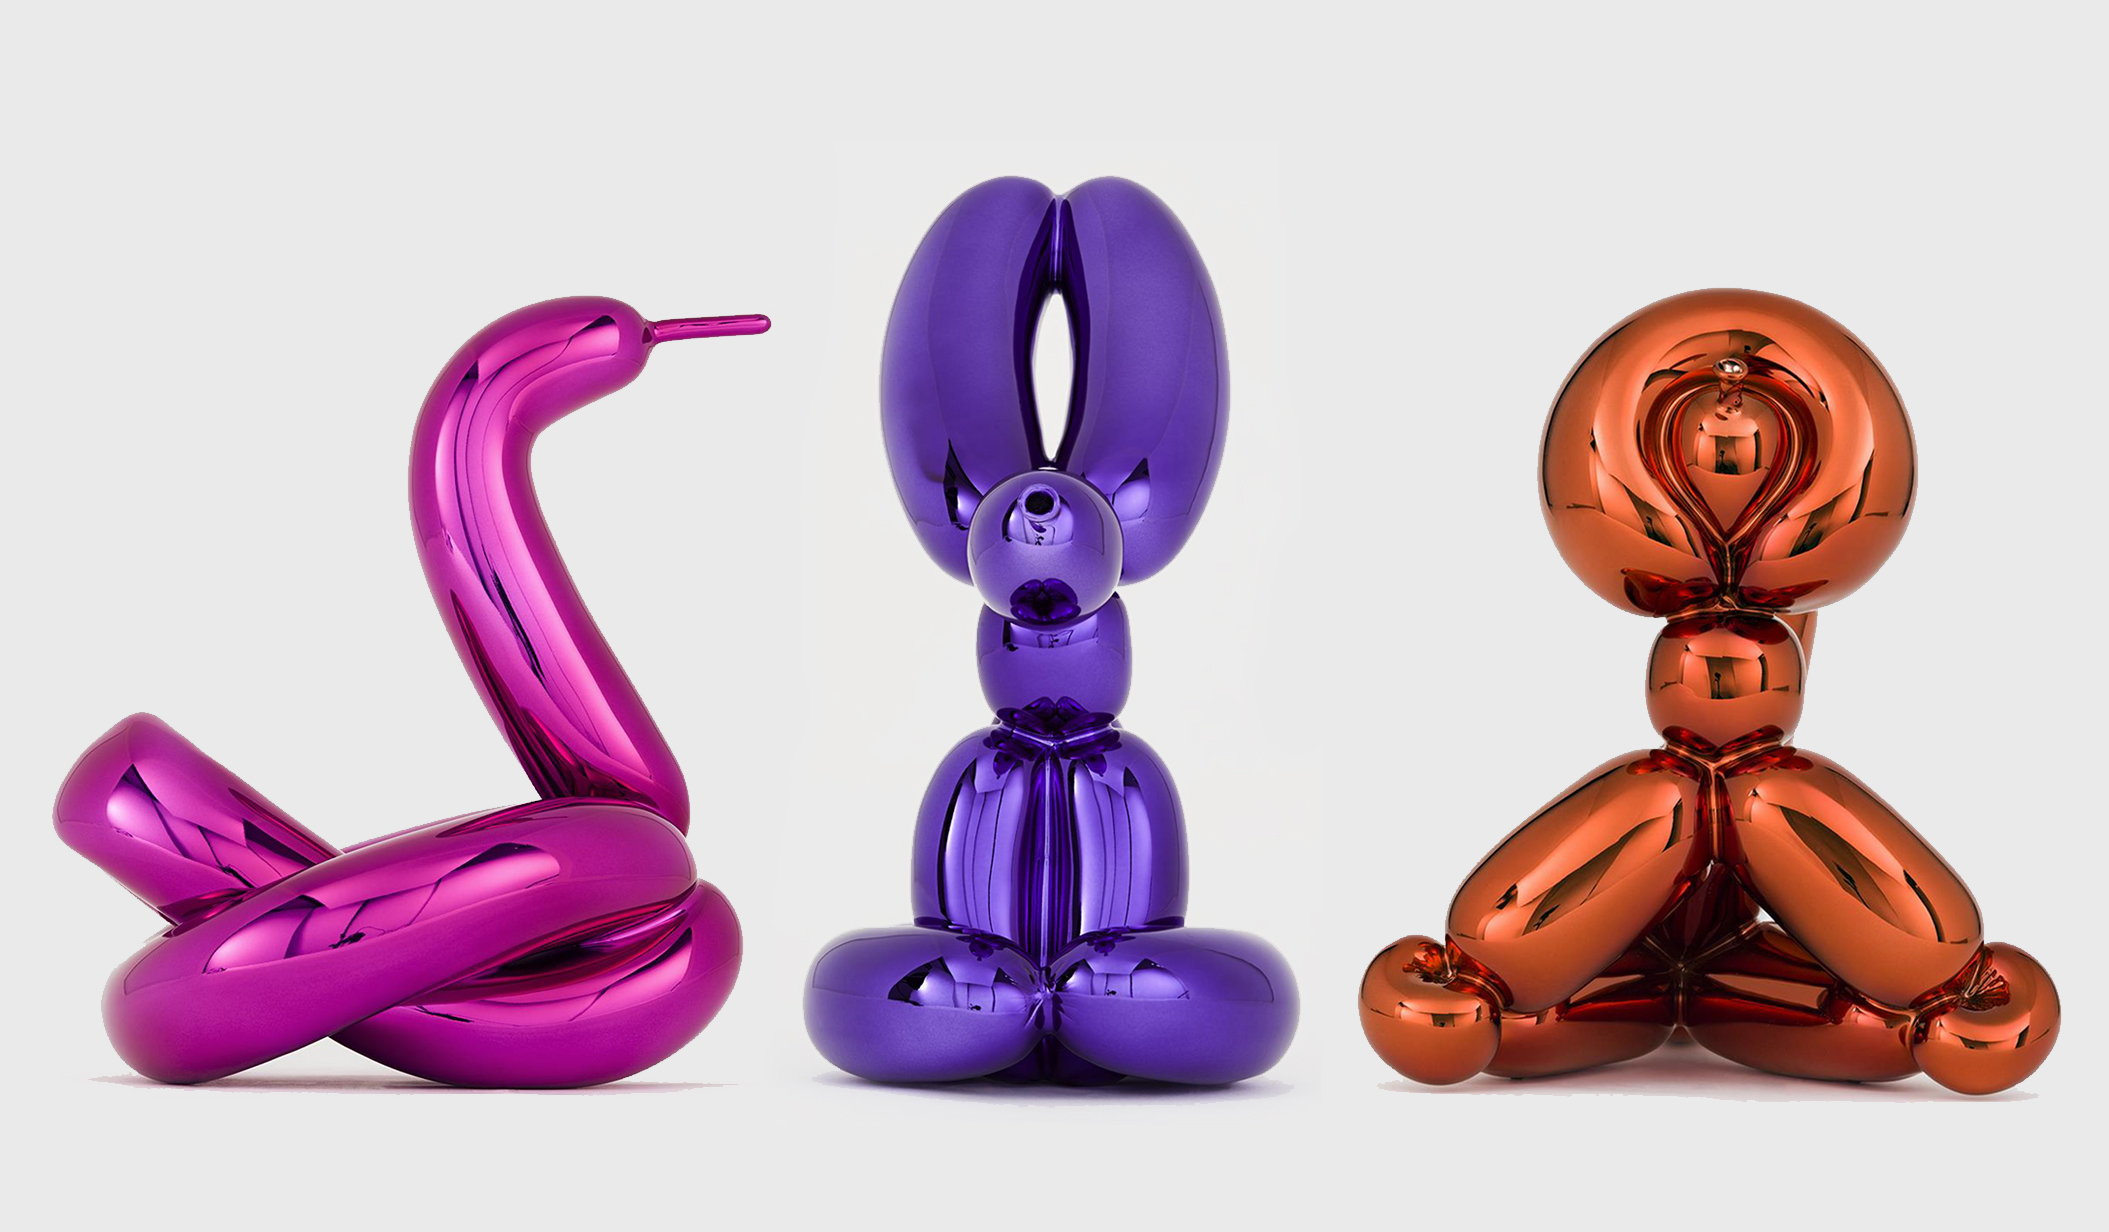  Jeff Koons, Balloon Swan, Rabbit, and Monkey, 2019 (Set of Three) Artist: Jeff Koons (1955 - ) Title: Balloon Swan, Rabbit, and Monkey, 2019 (Set of Three) Medium: Porcelain sculpture with chromatic coating